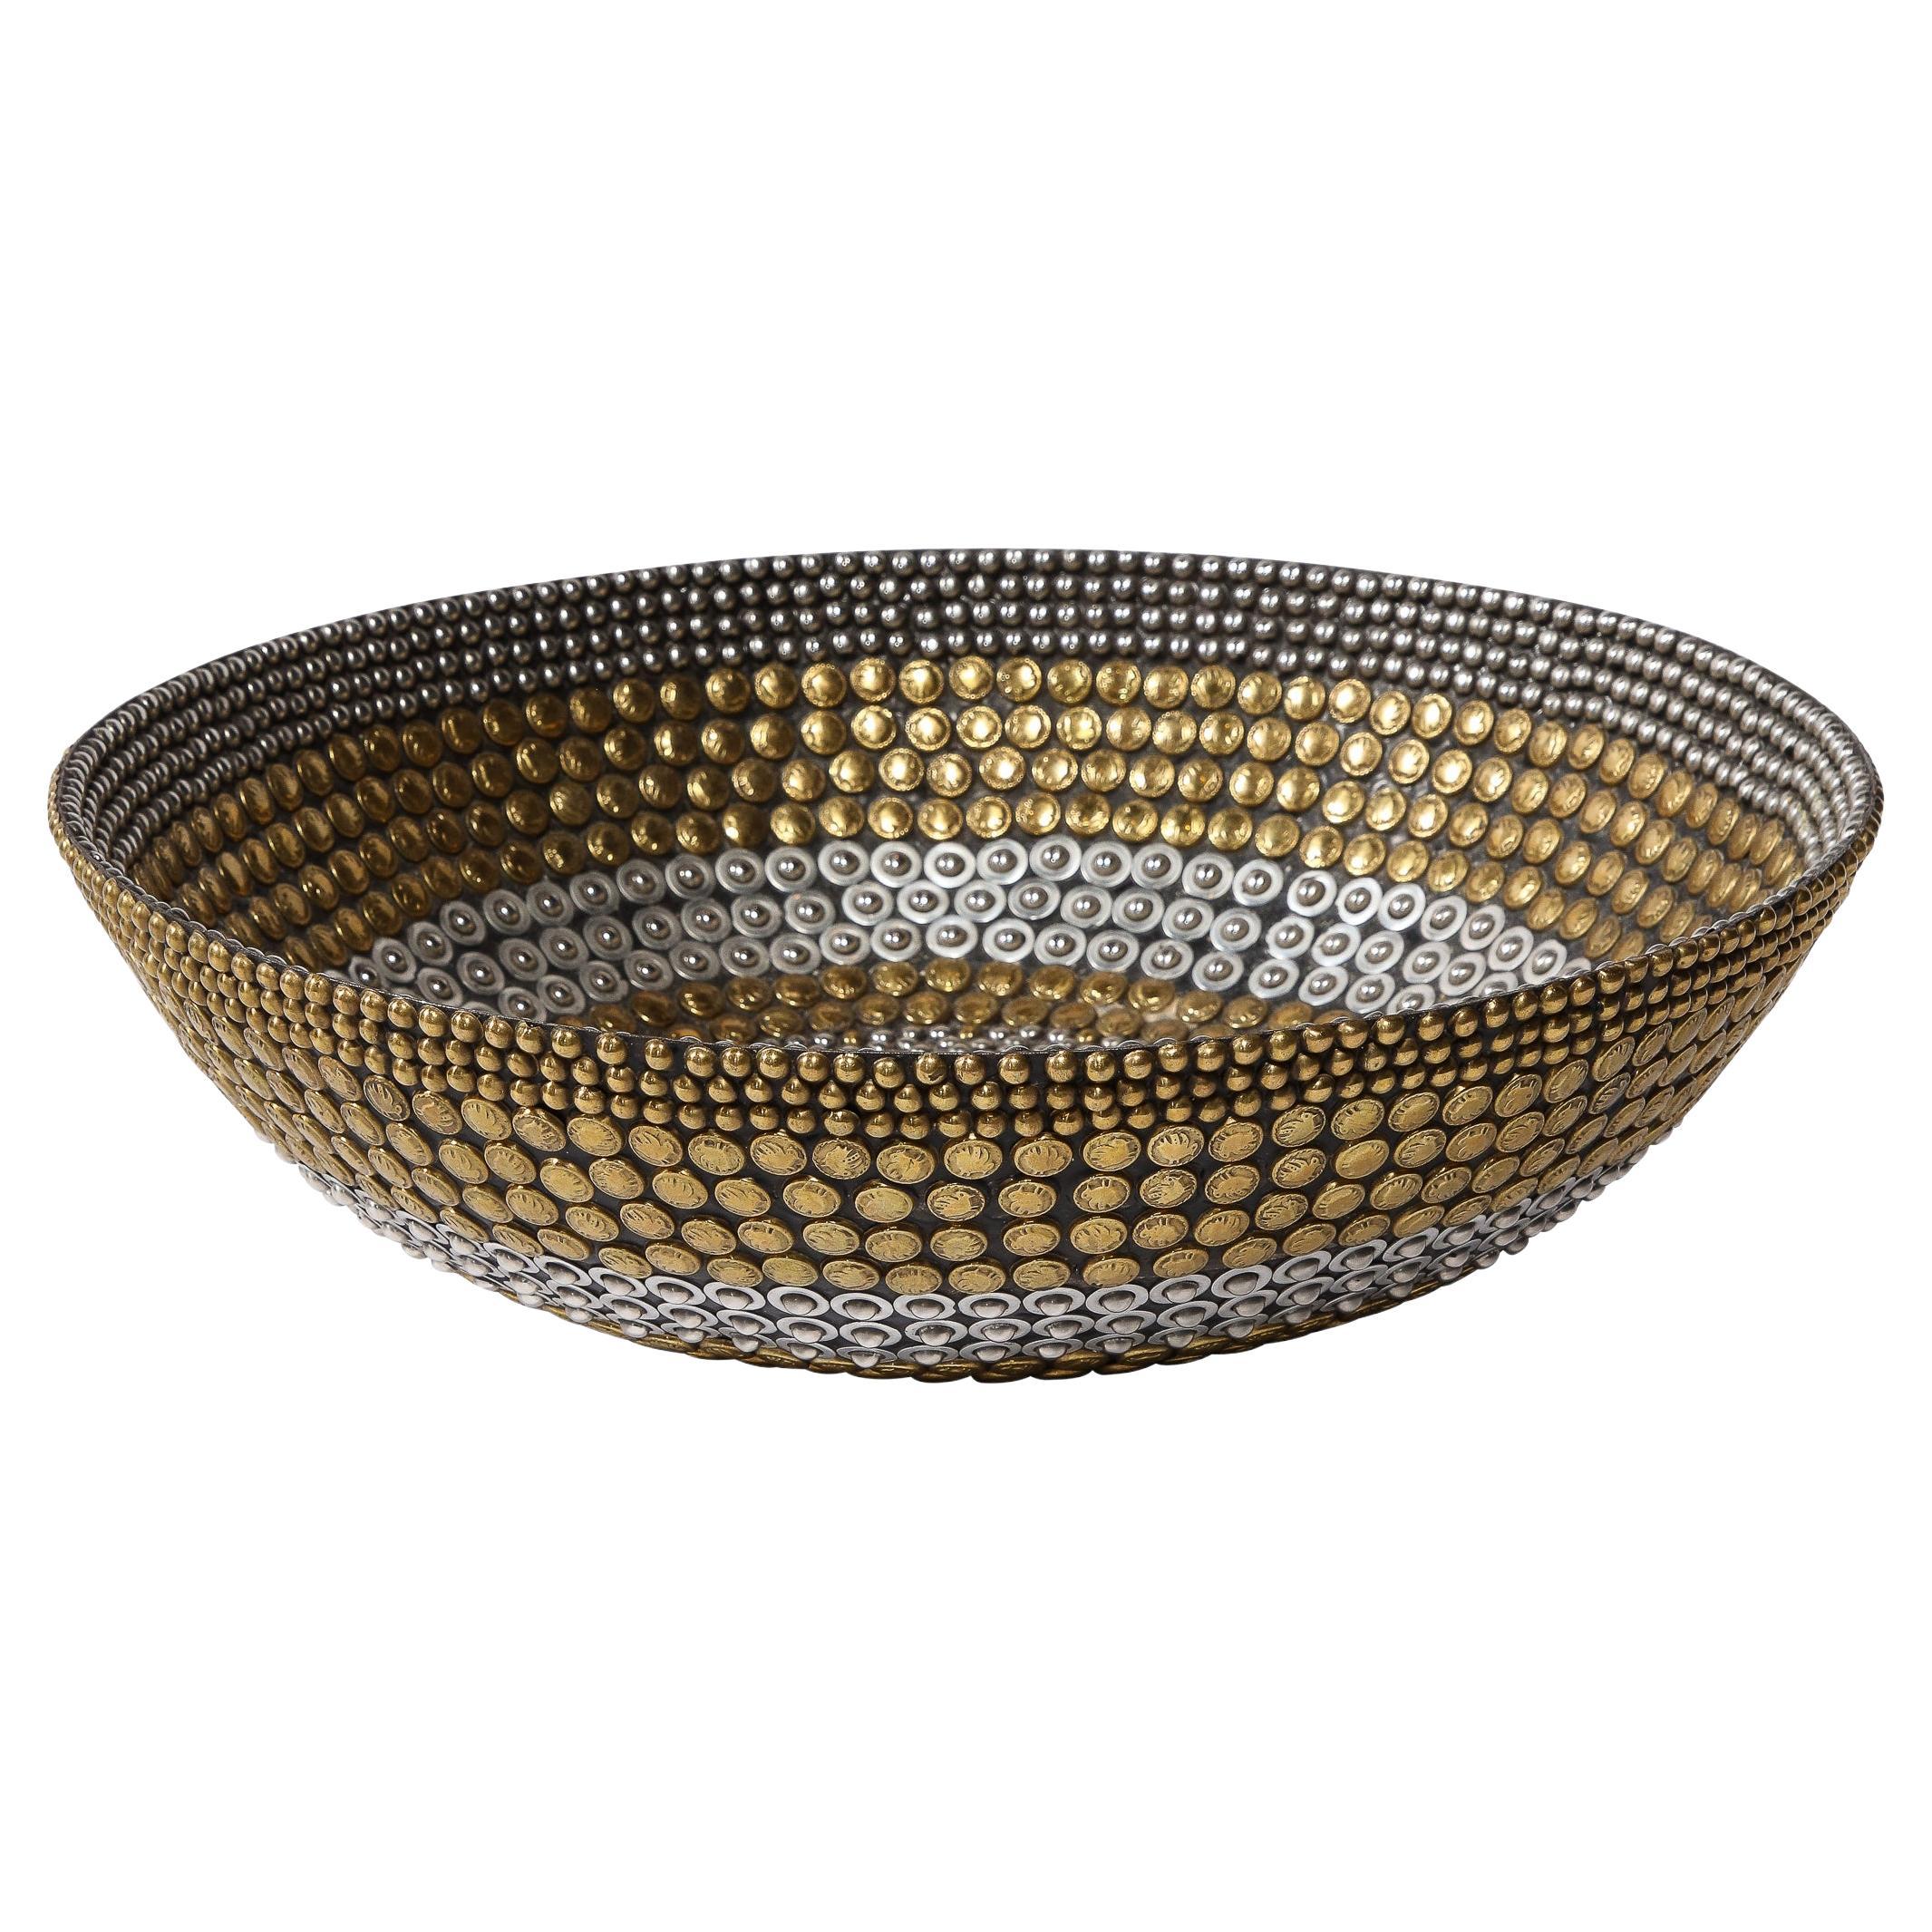 Modernist Centerpiece Bowl in Brass and Nickel Studded Banding by Kim Seybert